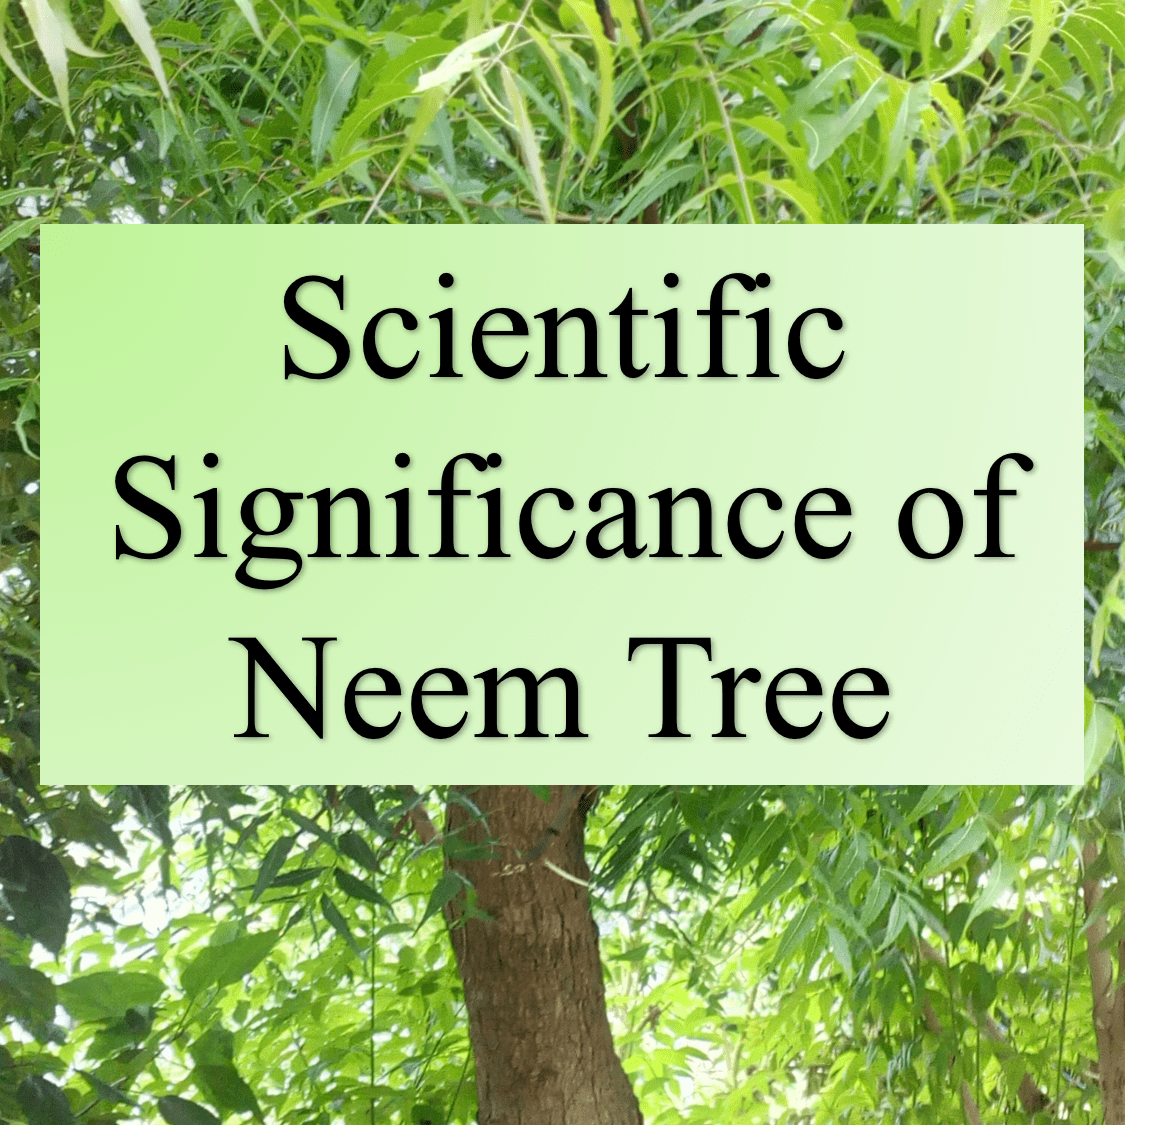 Scientific Significance of Neem Tree